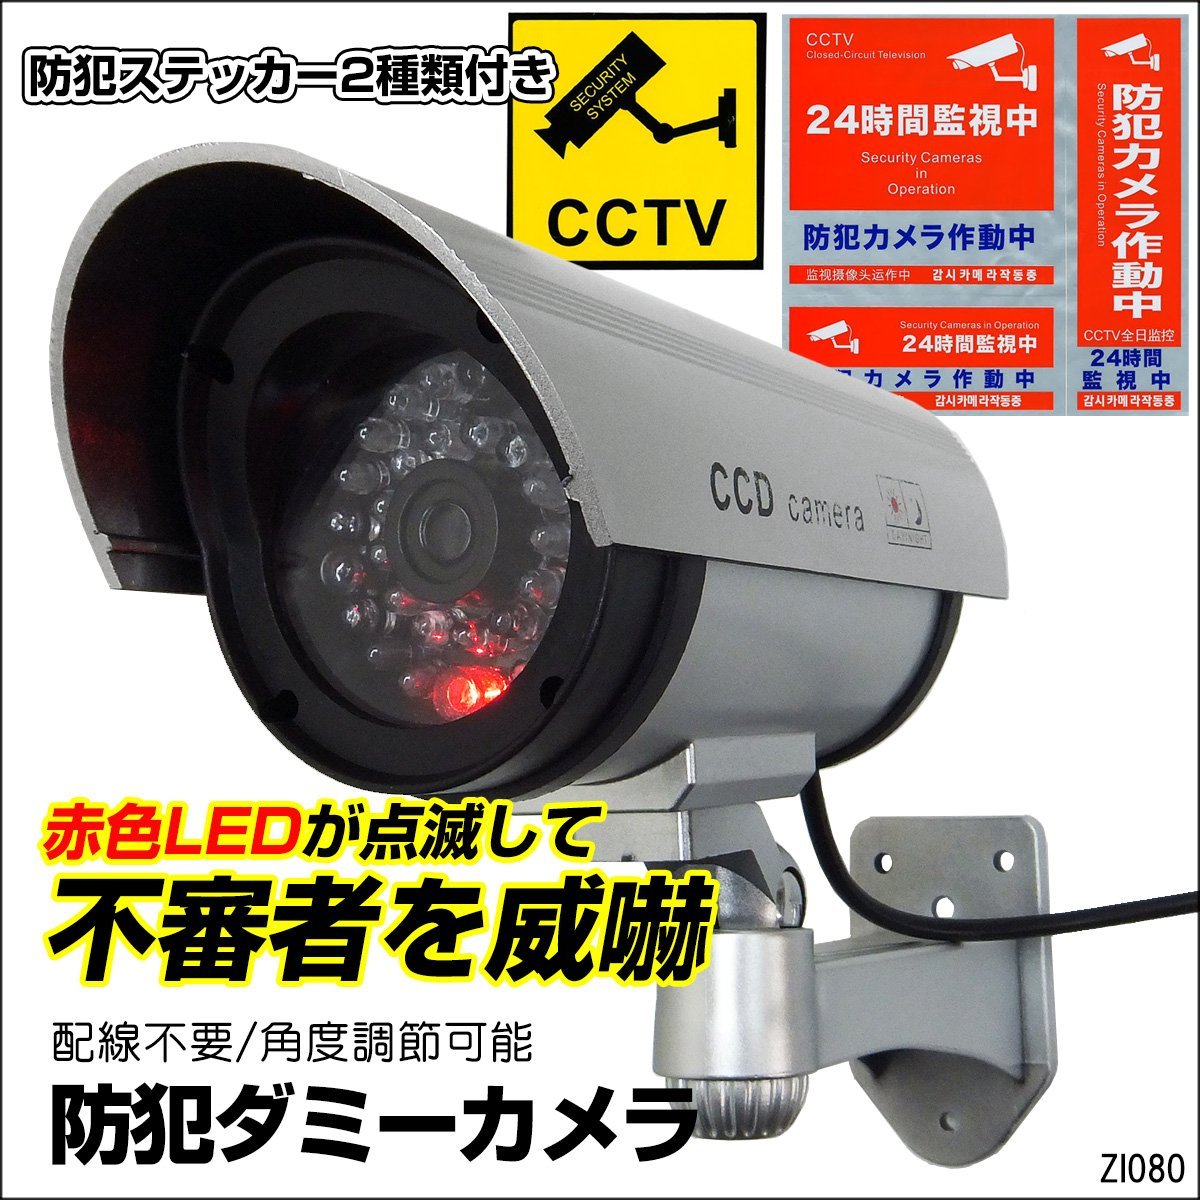 IRカメラ型 ダミーカメラⅡ 防犯カメラ 赤色LED点滅 配線不要 防犯対策 監視 簡単設置 防犯ステッカー2種類付/9_画像1